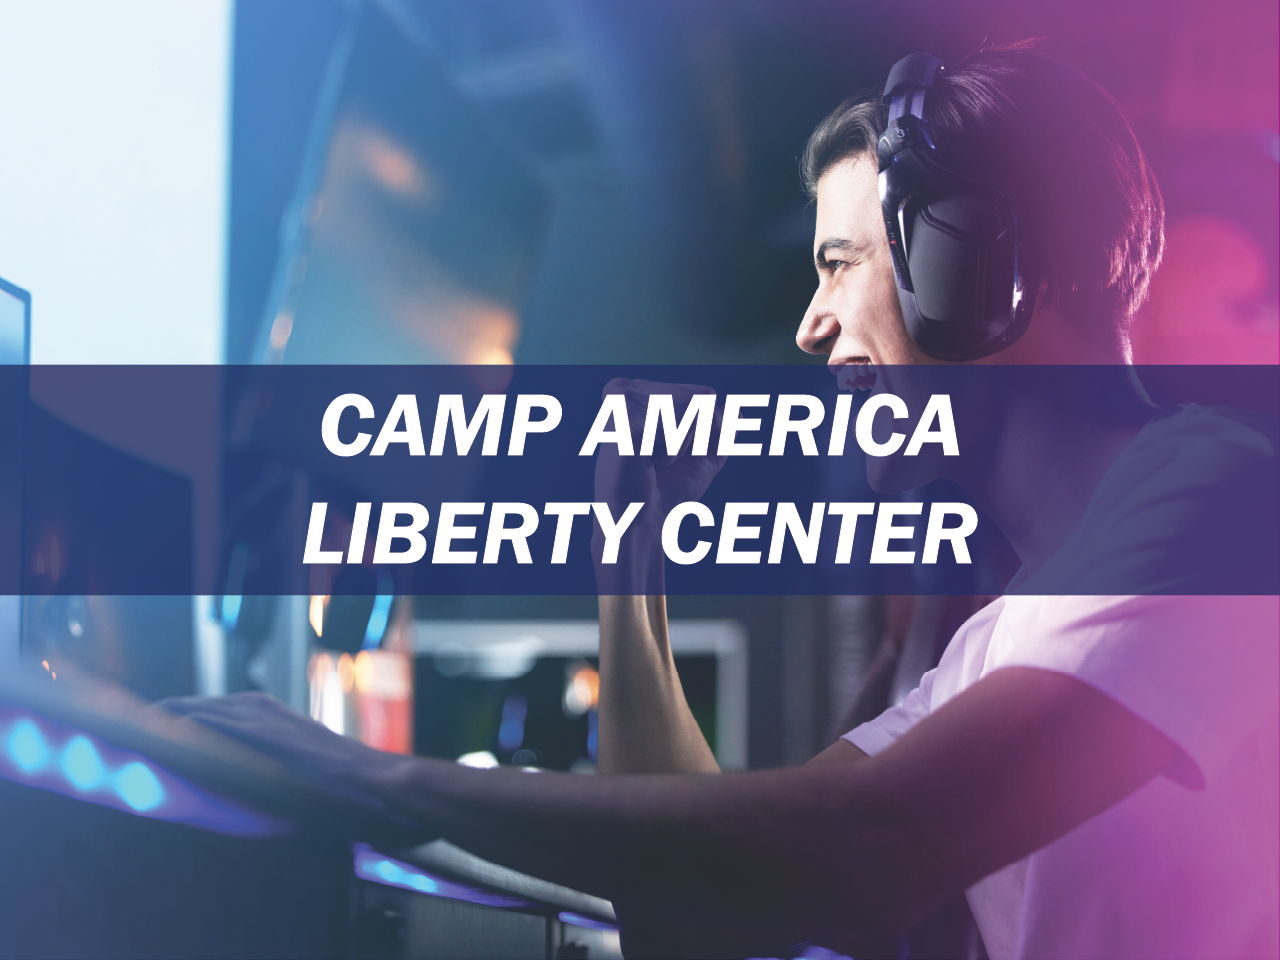 Camp America Liberty Center